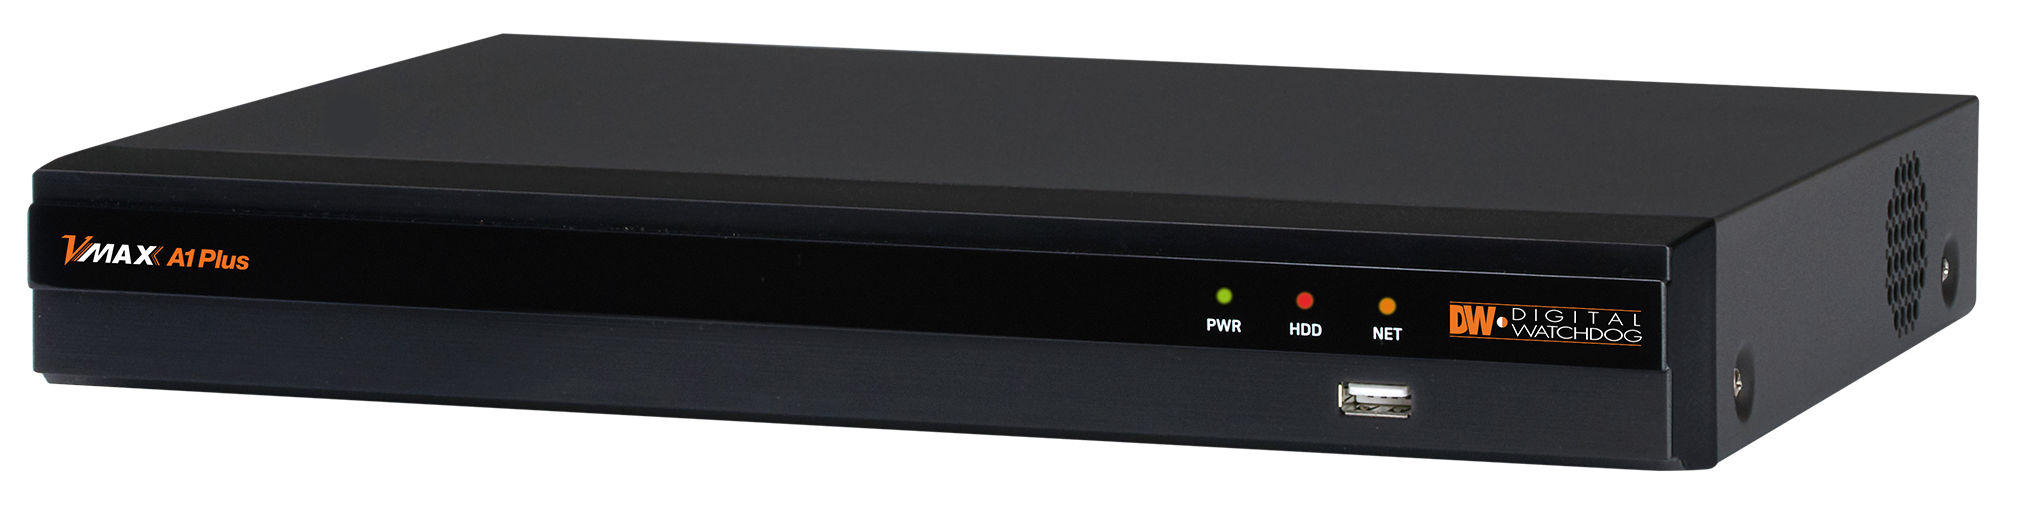 Digital Watchdog DW-VA1P810T  UHDoC - DVR 8ch 8 Channel Universal HD Over Coax DVR